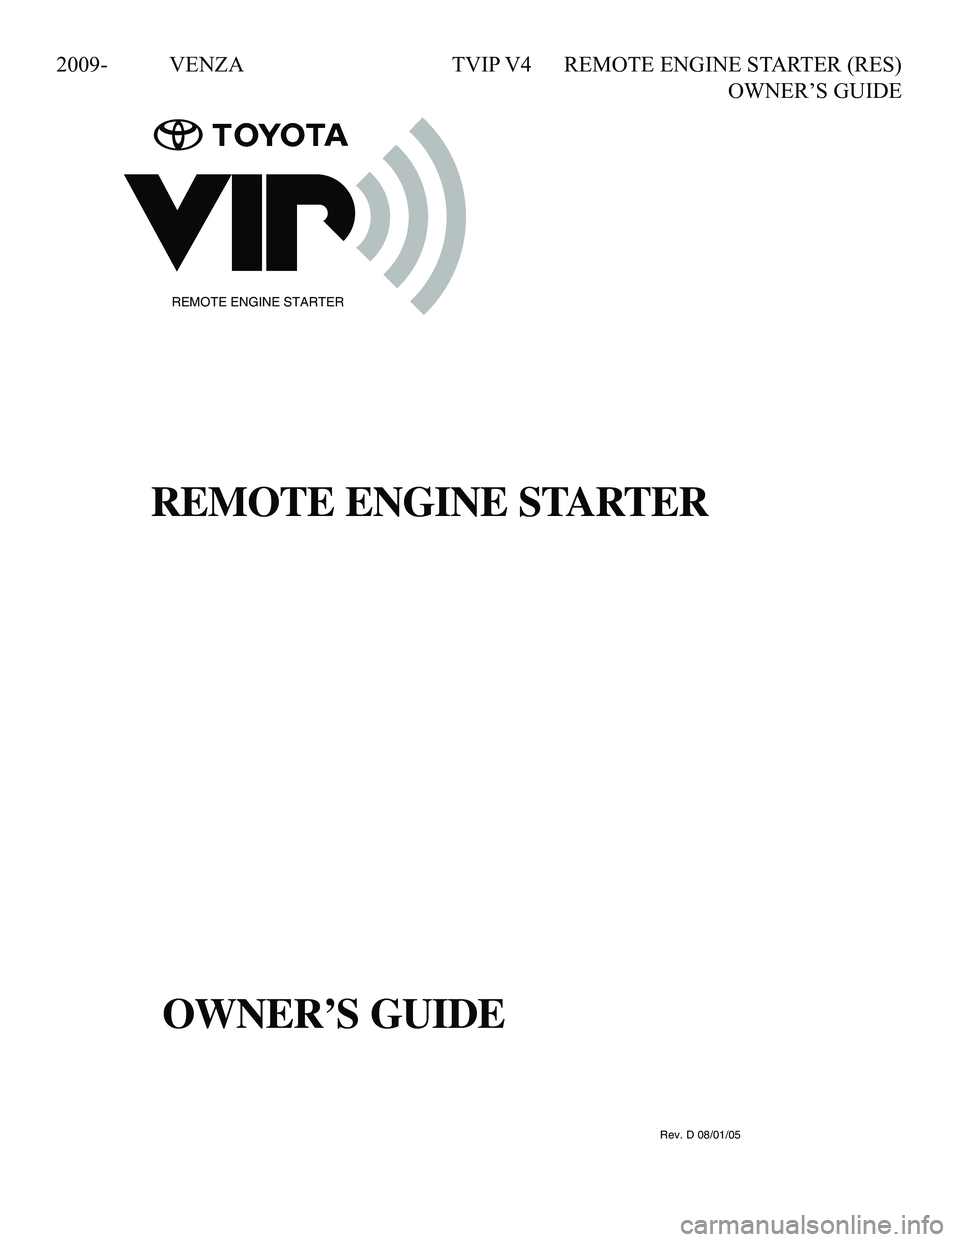 TOYOTA VENZA 2010  Accessories, Audio & Navigation (in English) 2009- VENZA  TVIP V4 REMOTE ENGINE STARTER (RES) 
     OWNER’S GUIDE
090002-28930700Rev. D 08/01/05
REMOTE ENGINE STARTER
REMOTE ENGINE STARTER
OWNER'S GUIDE
 
REMOTE ENGINE STARTER
OWNER’S GU